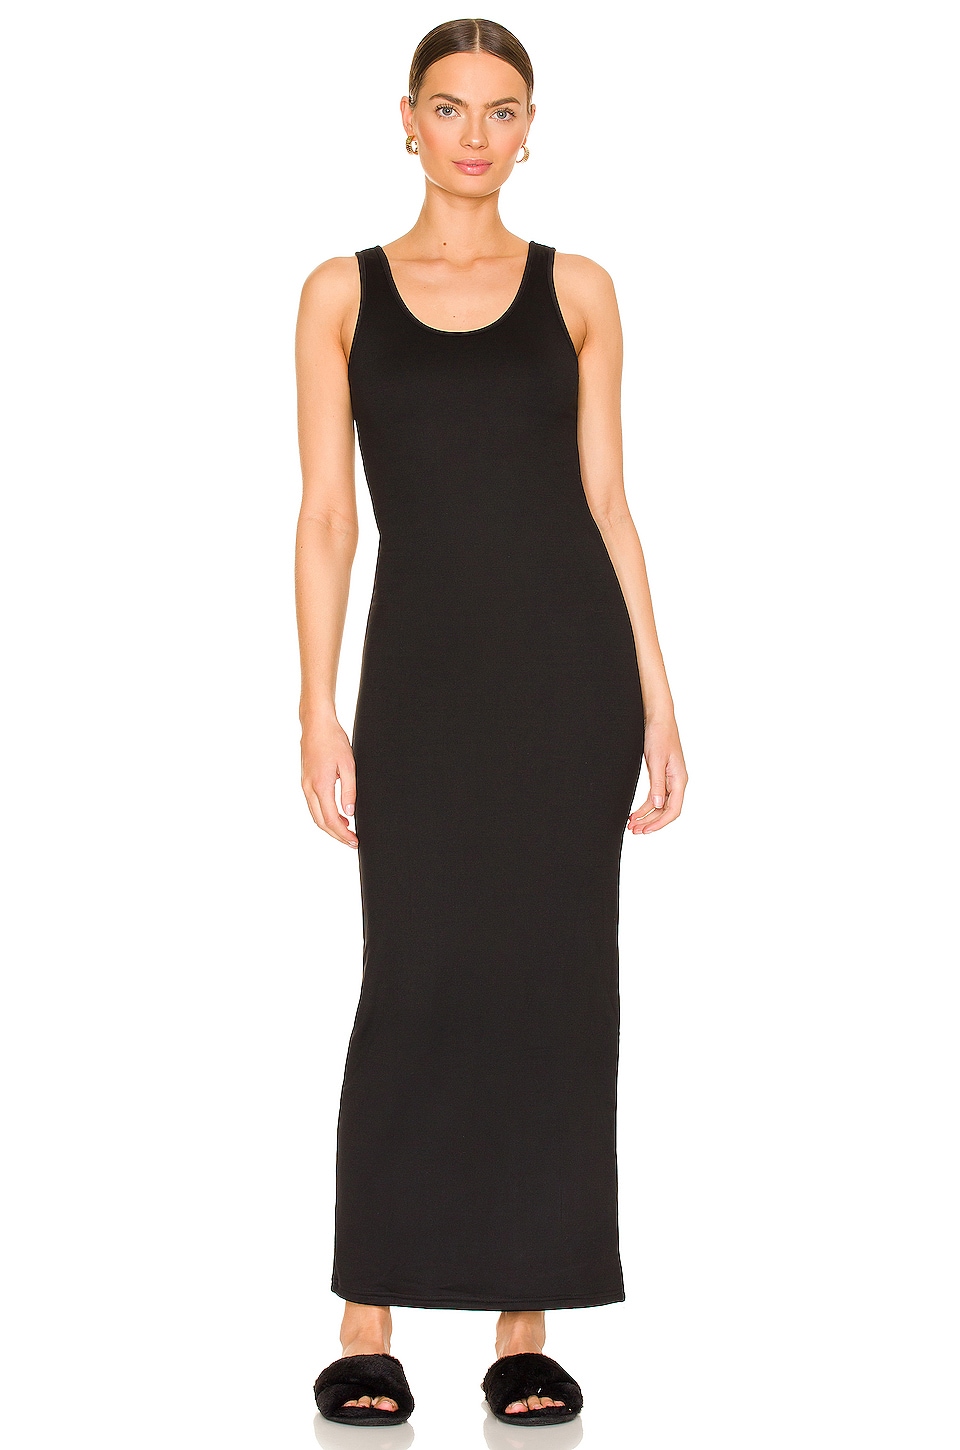 BUMPSUIT The Dress in Black | REVOLVE